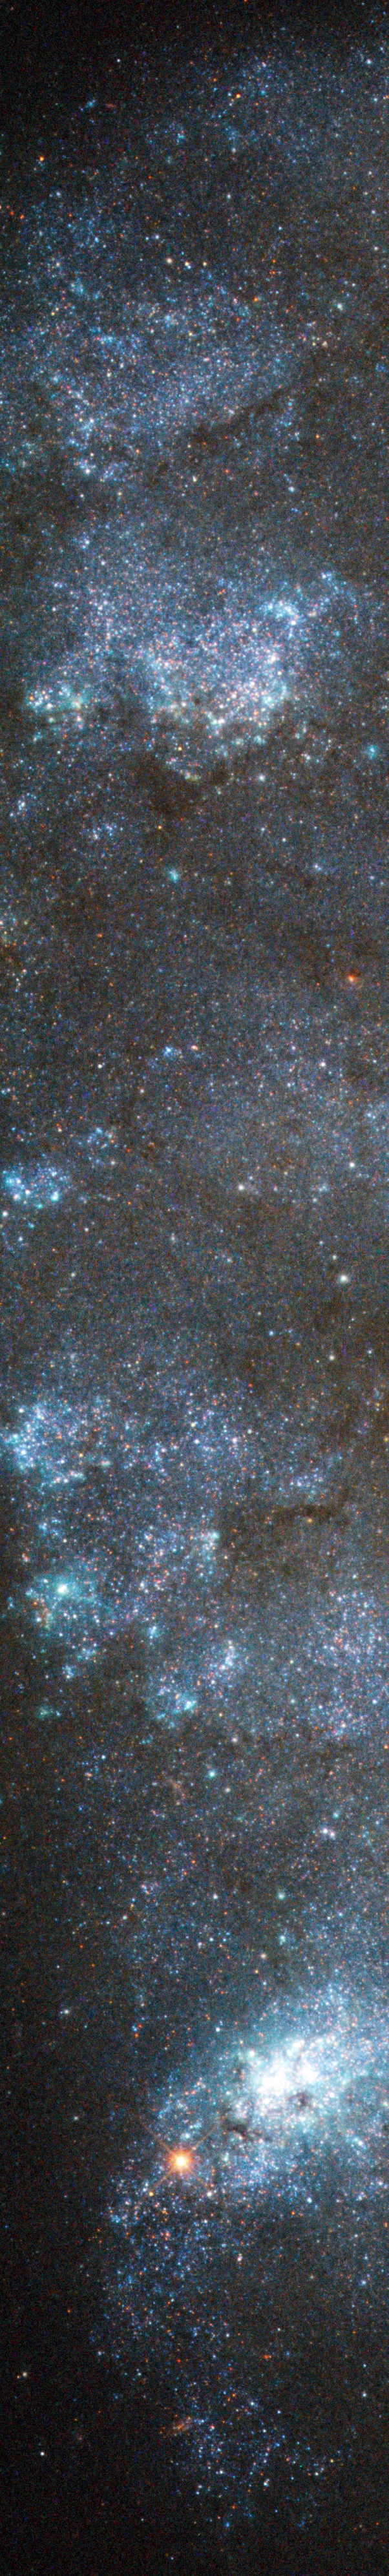 Image credit: ESA/Hubble & NASA. Acknowledgement: Matej Novak.